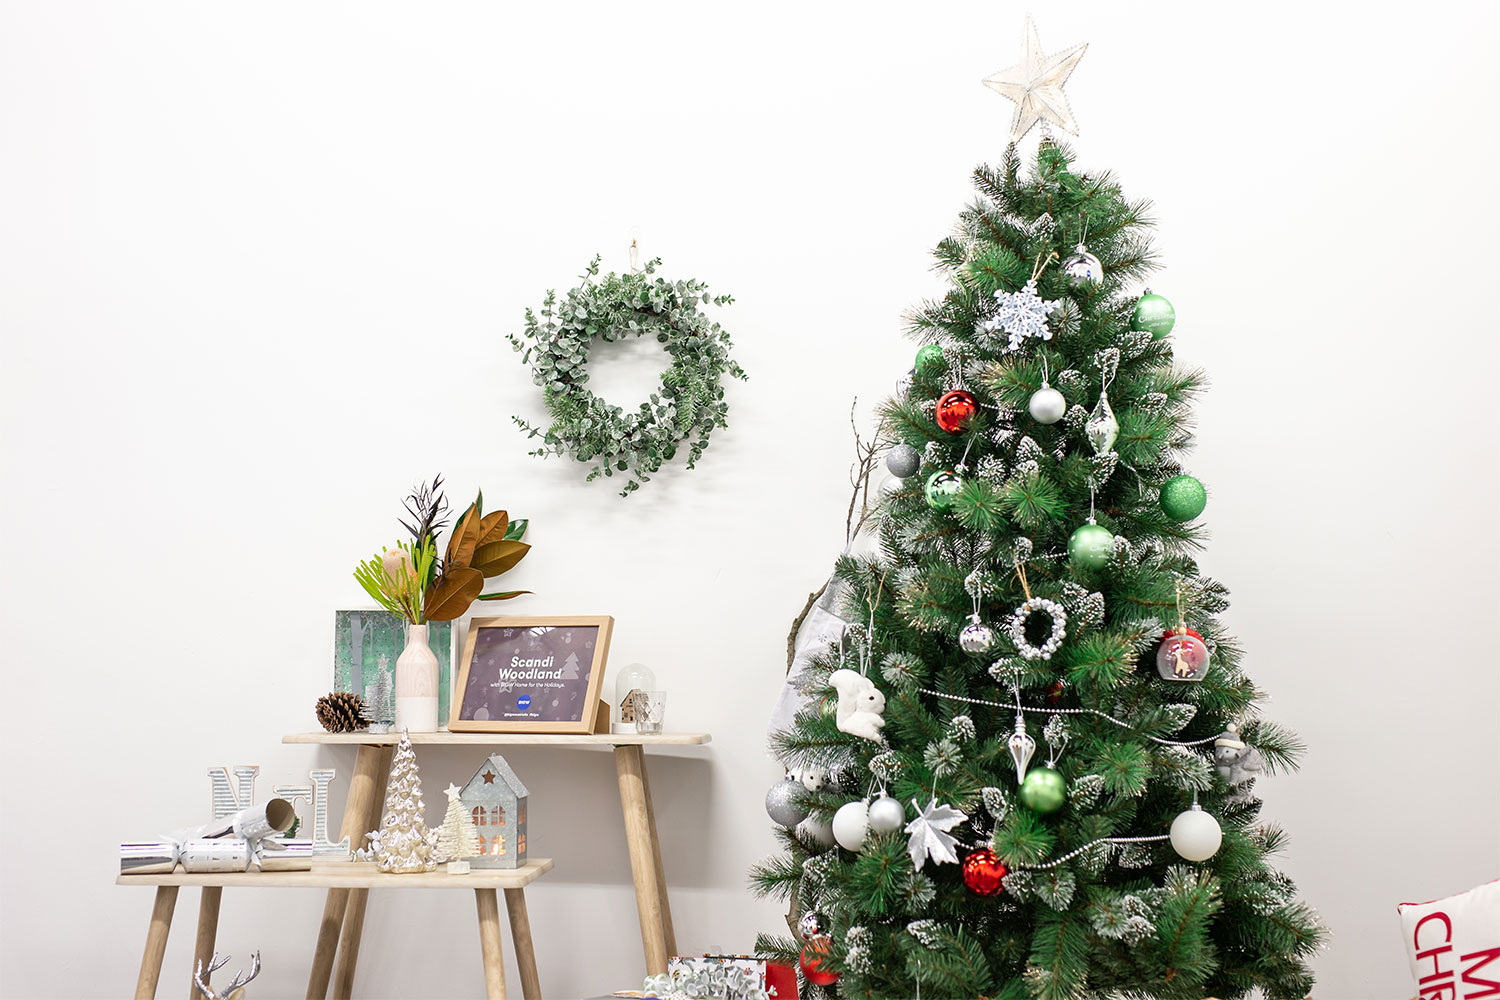 Big W Christmas decorations, crafts, hacks & ideas for ...